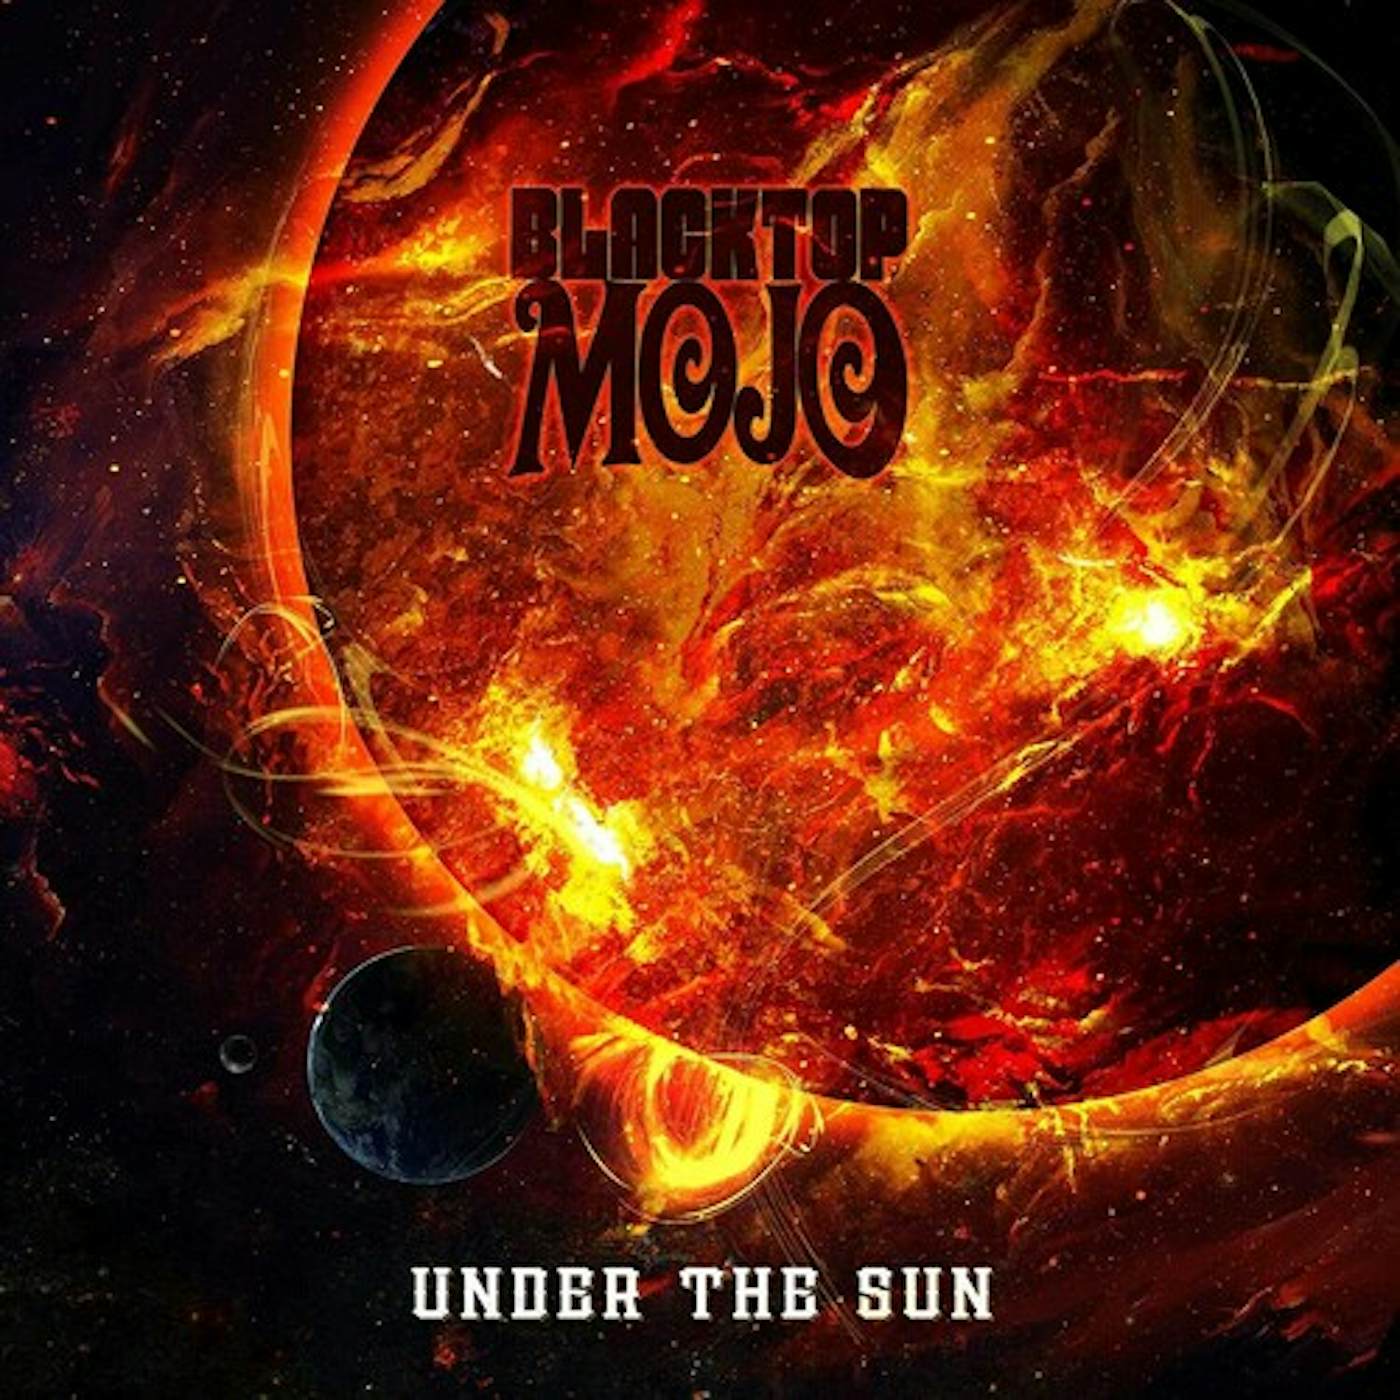 Blacktop Mojo Under the Sun Vinyl Record